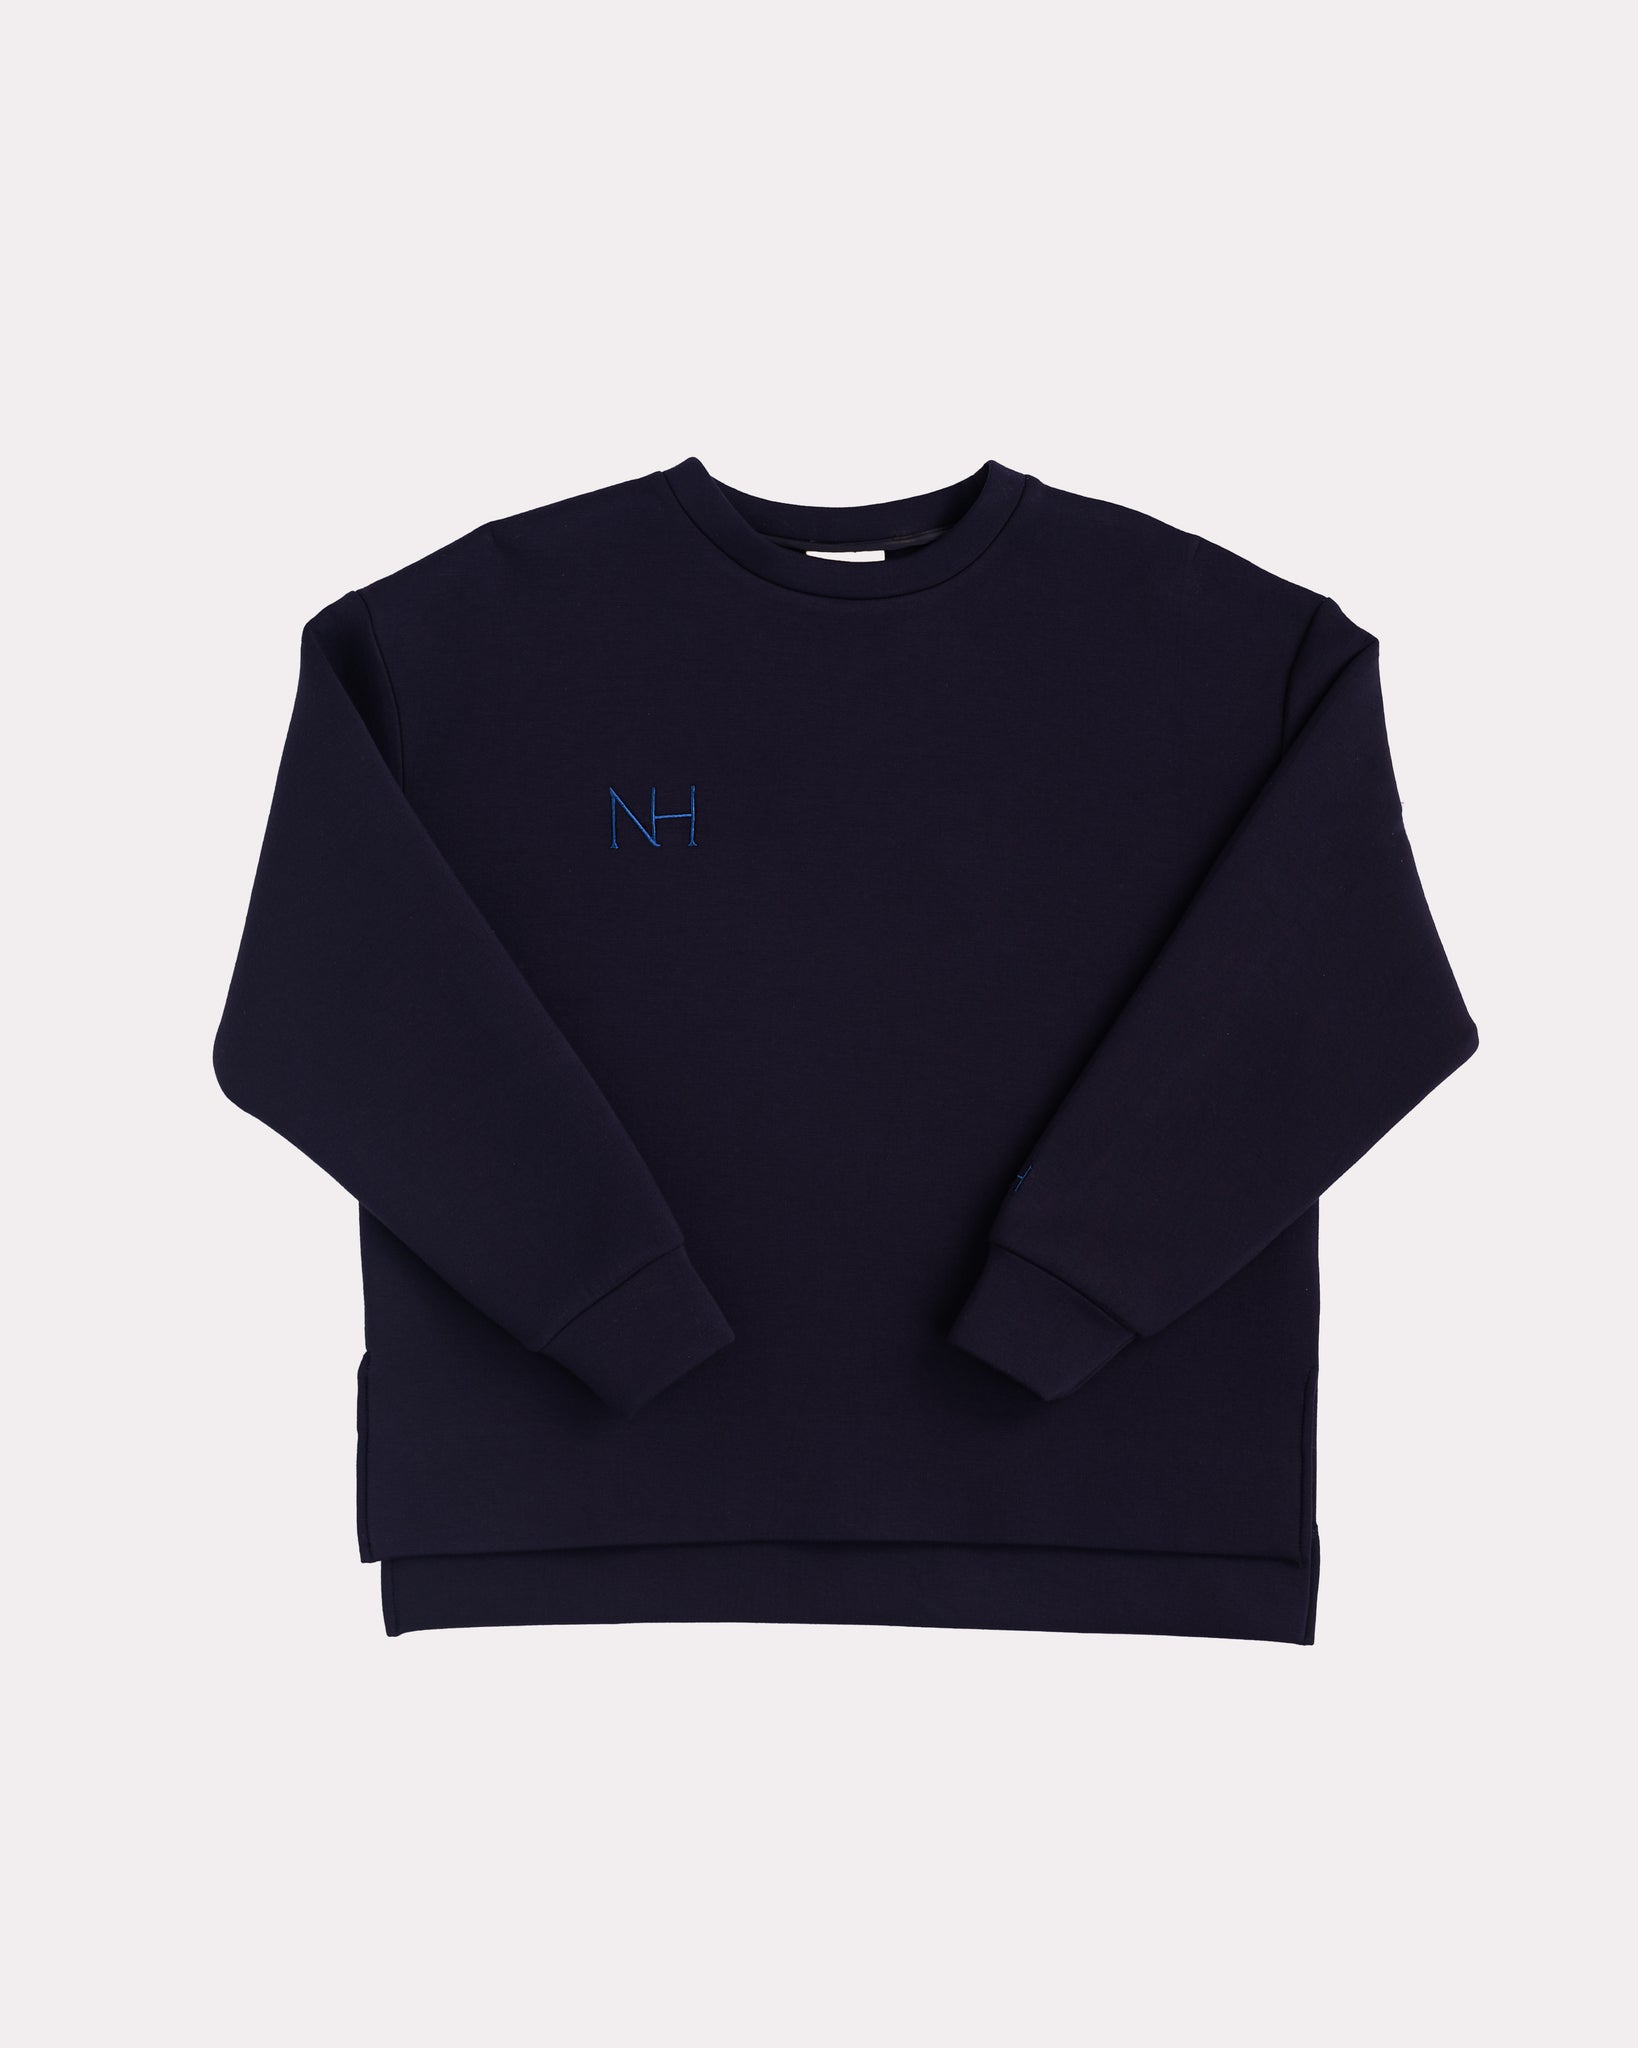 Embroidered Scuba Sweatshirt (Navy Blue)